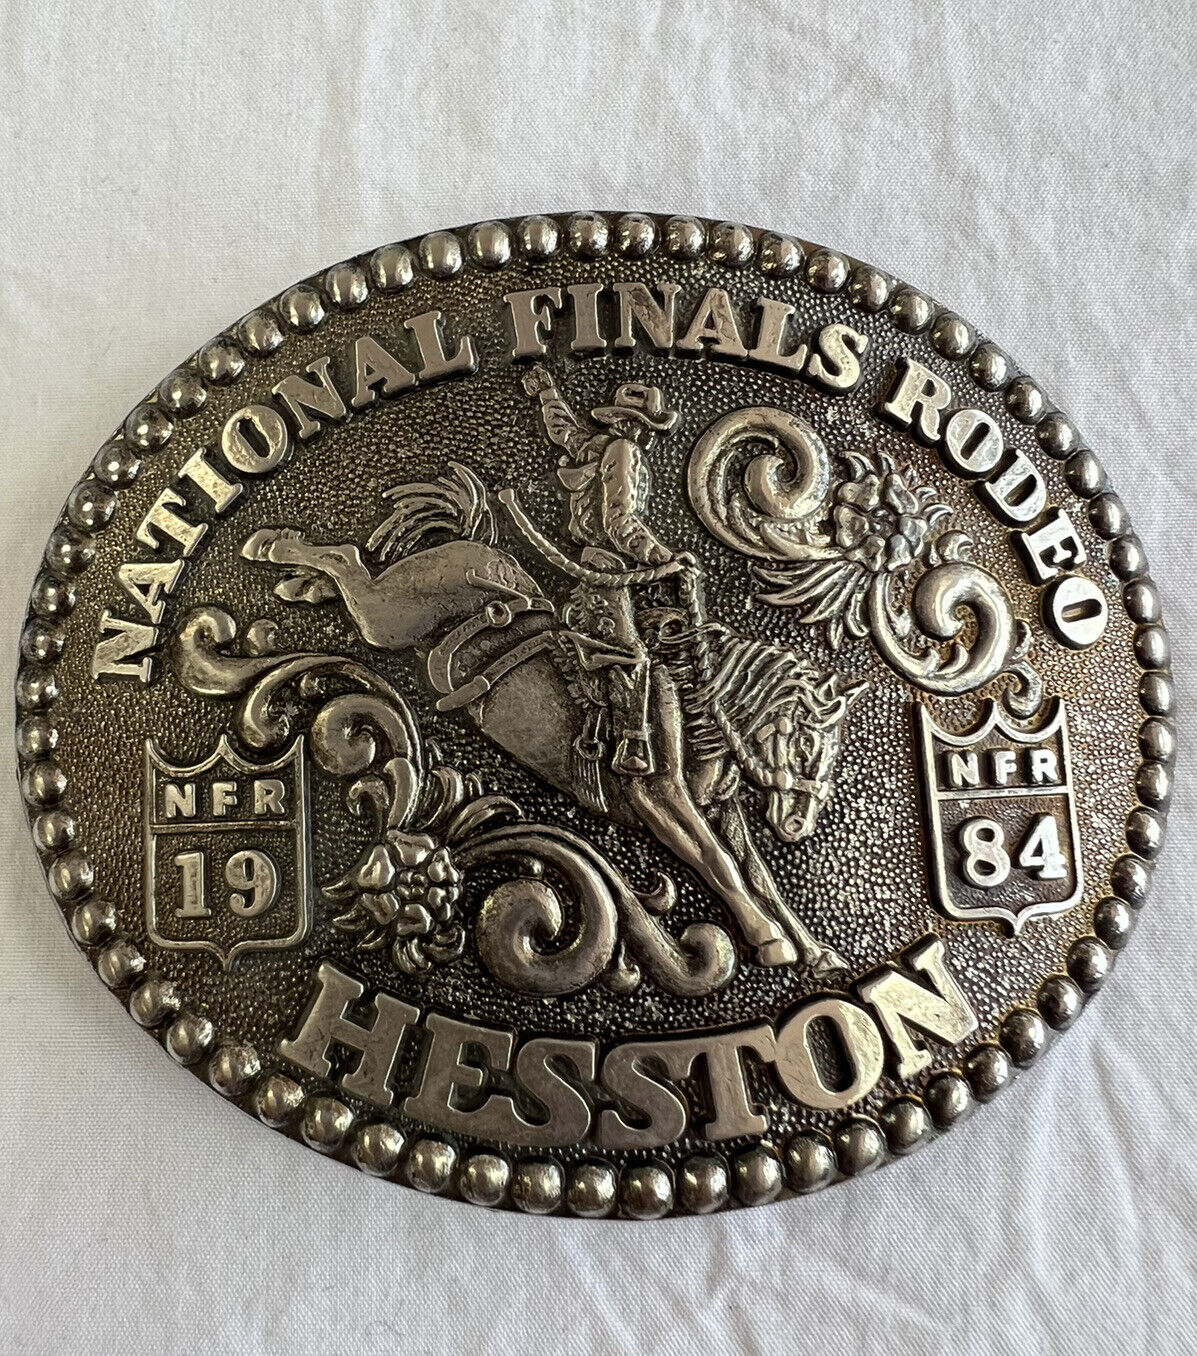 VTG Hesston National Finals Rare Rodeo NFR 1984 Belt Buckle Second Edition Anniv